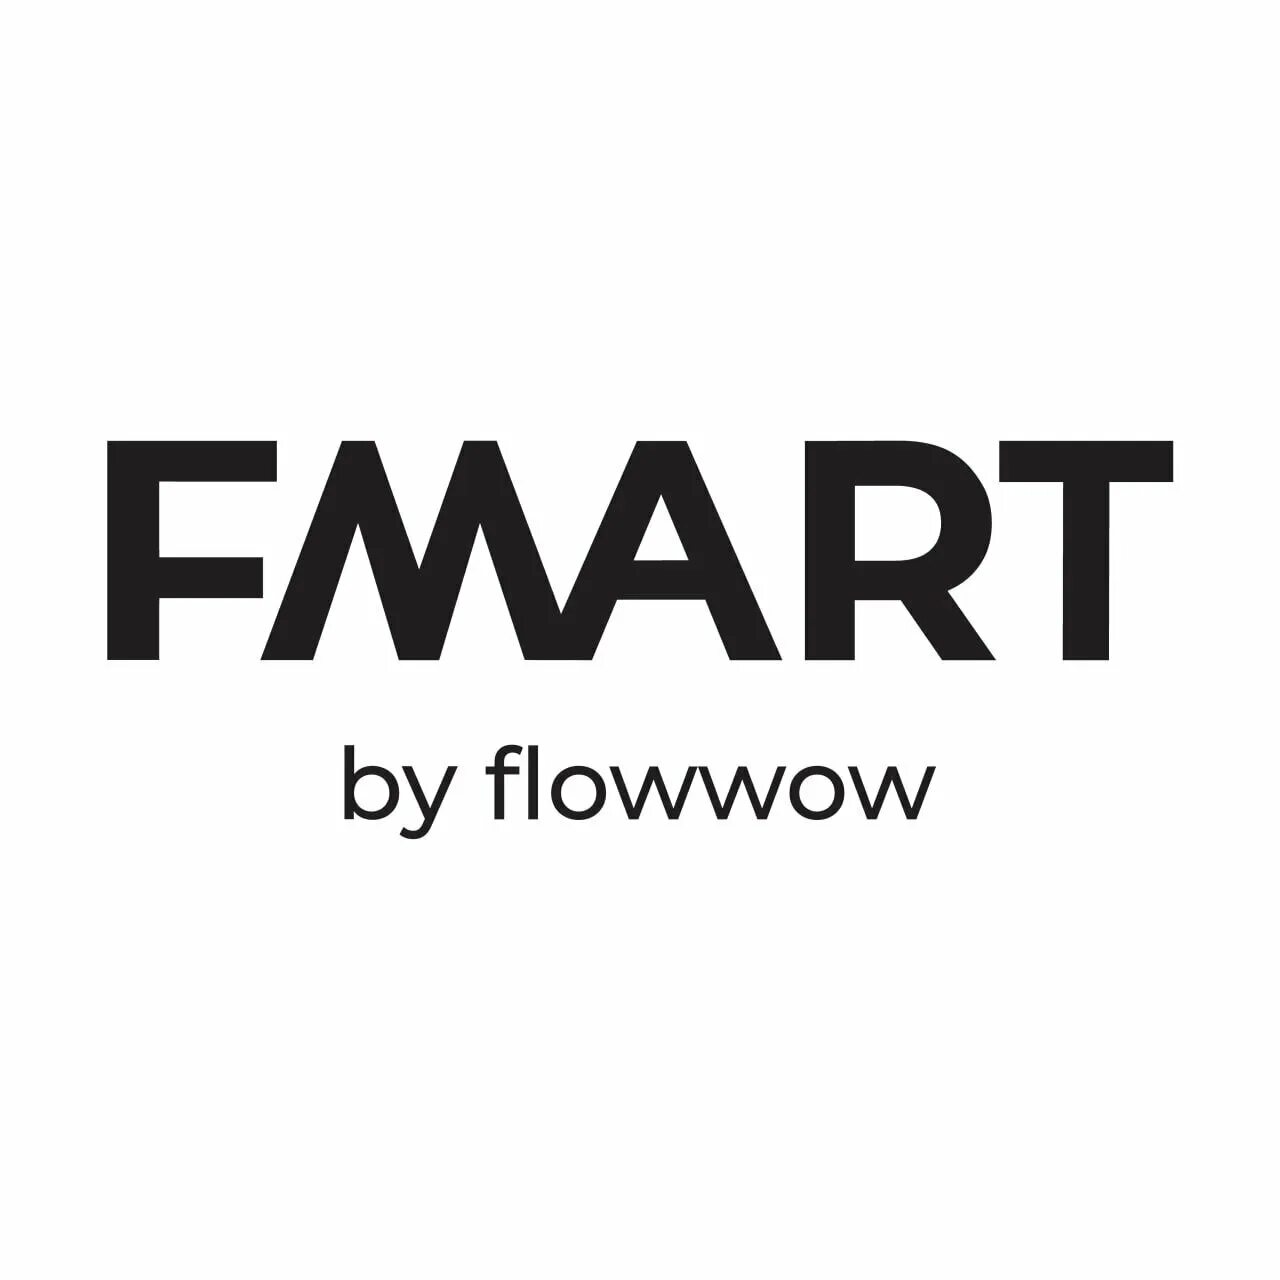 Сайт доставки flowwow. Fmart by Flowwow. Fmart цветы. Москва магазин цветов Fmart. Флоу воу.